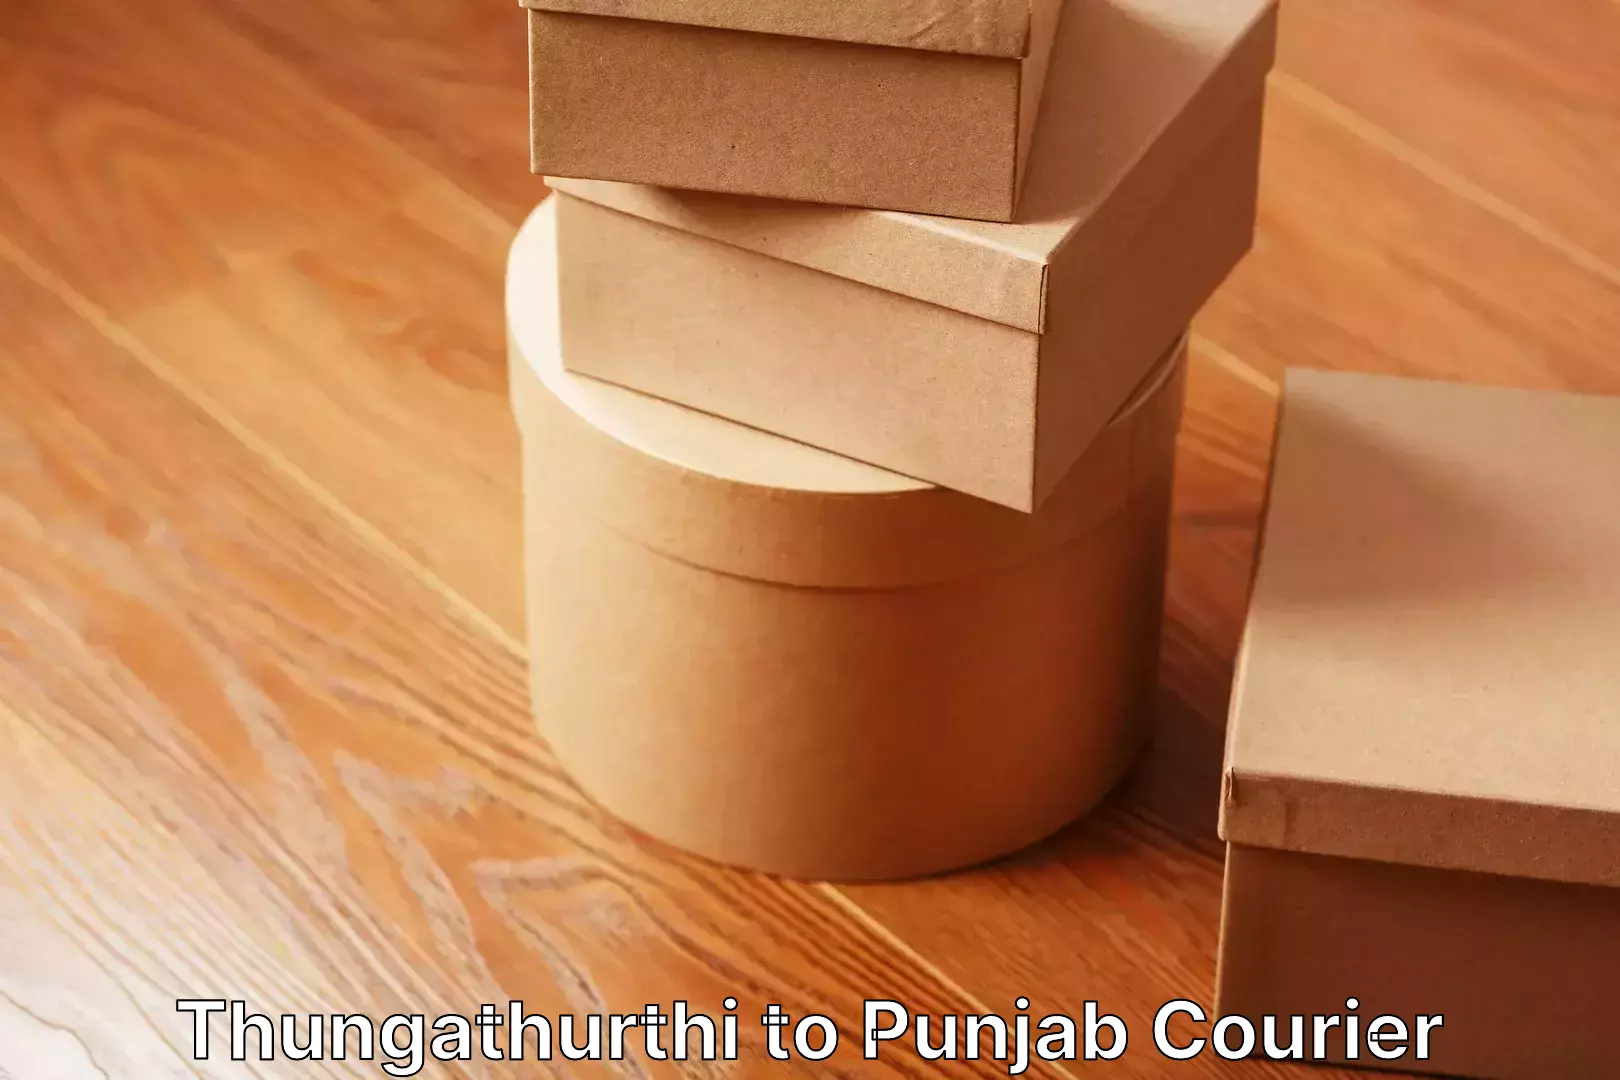 Home relocation experts Thungathurthi to Punjab